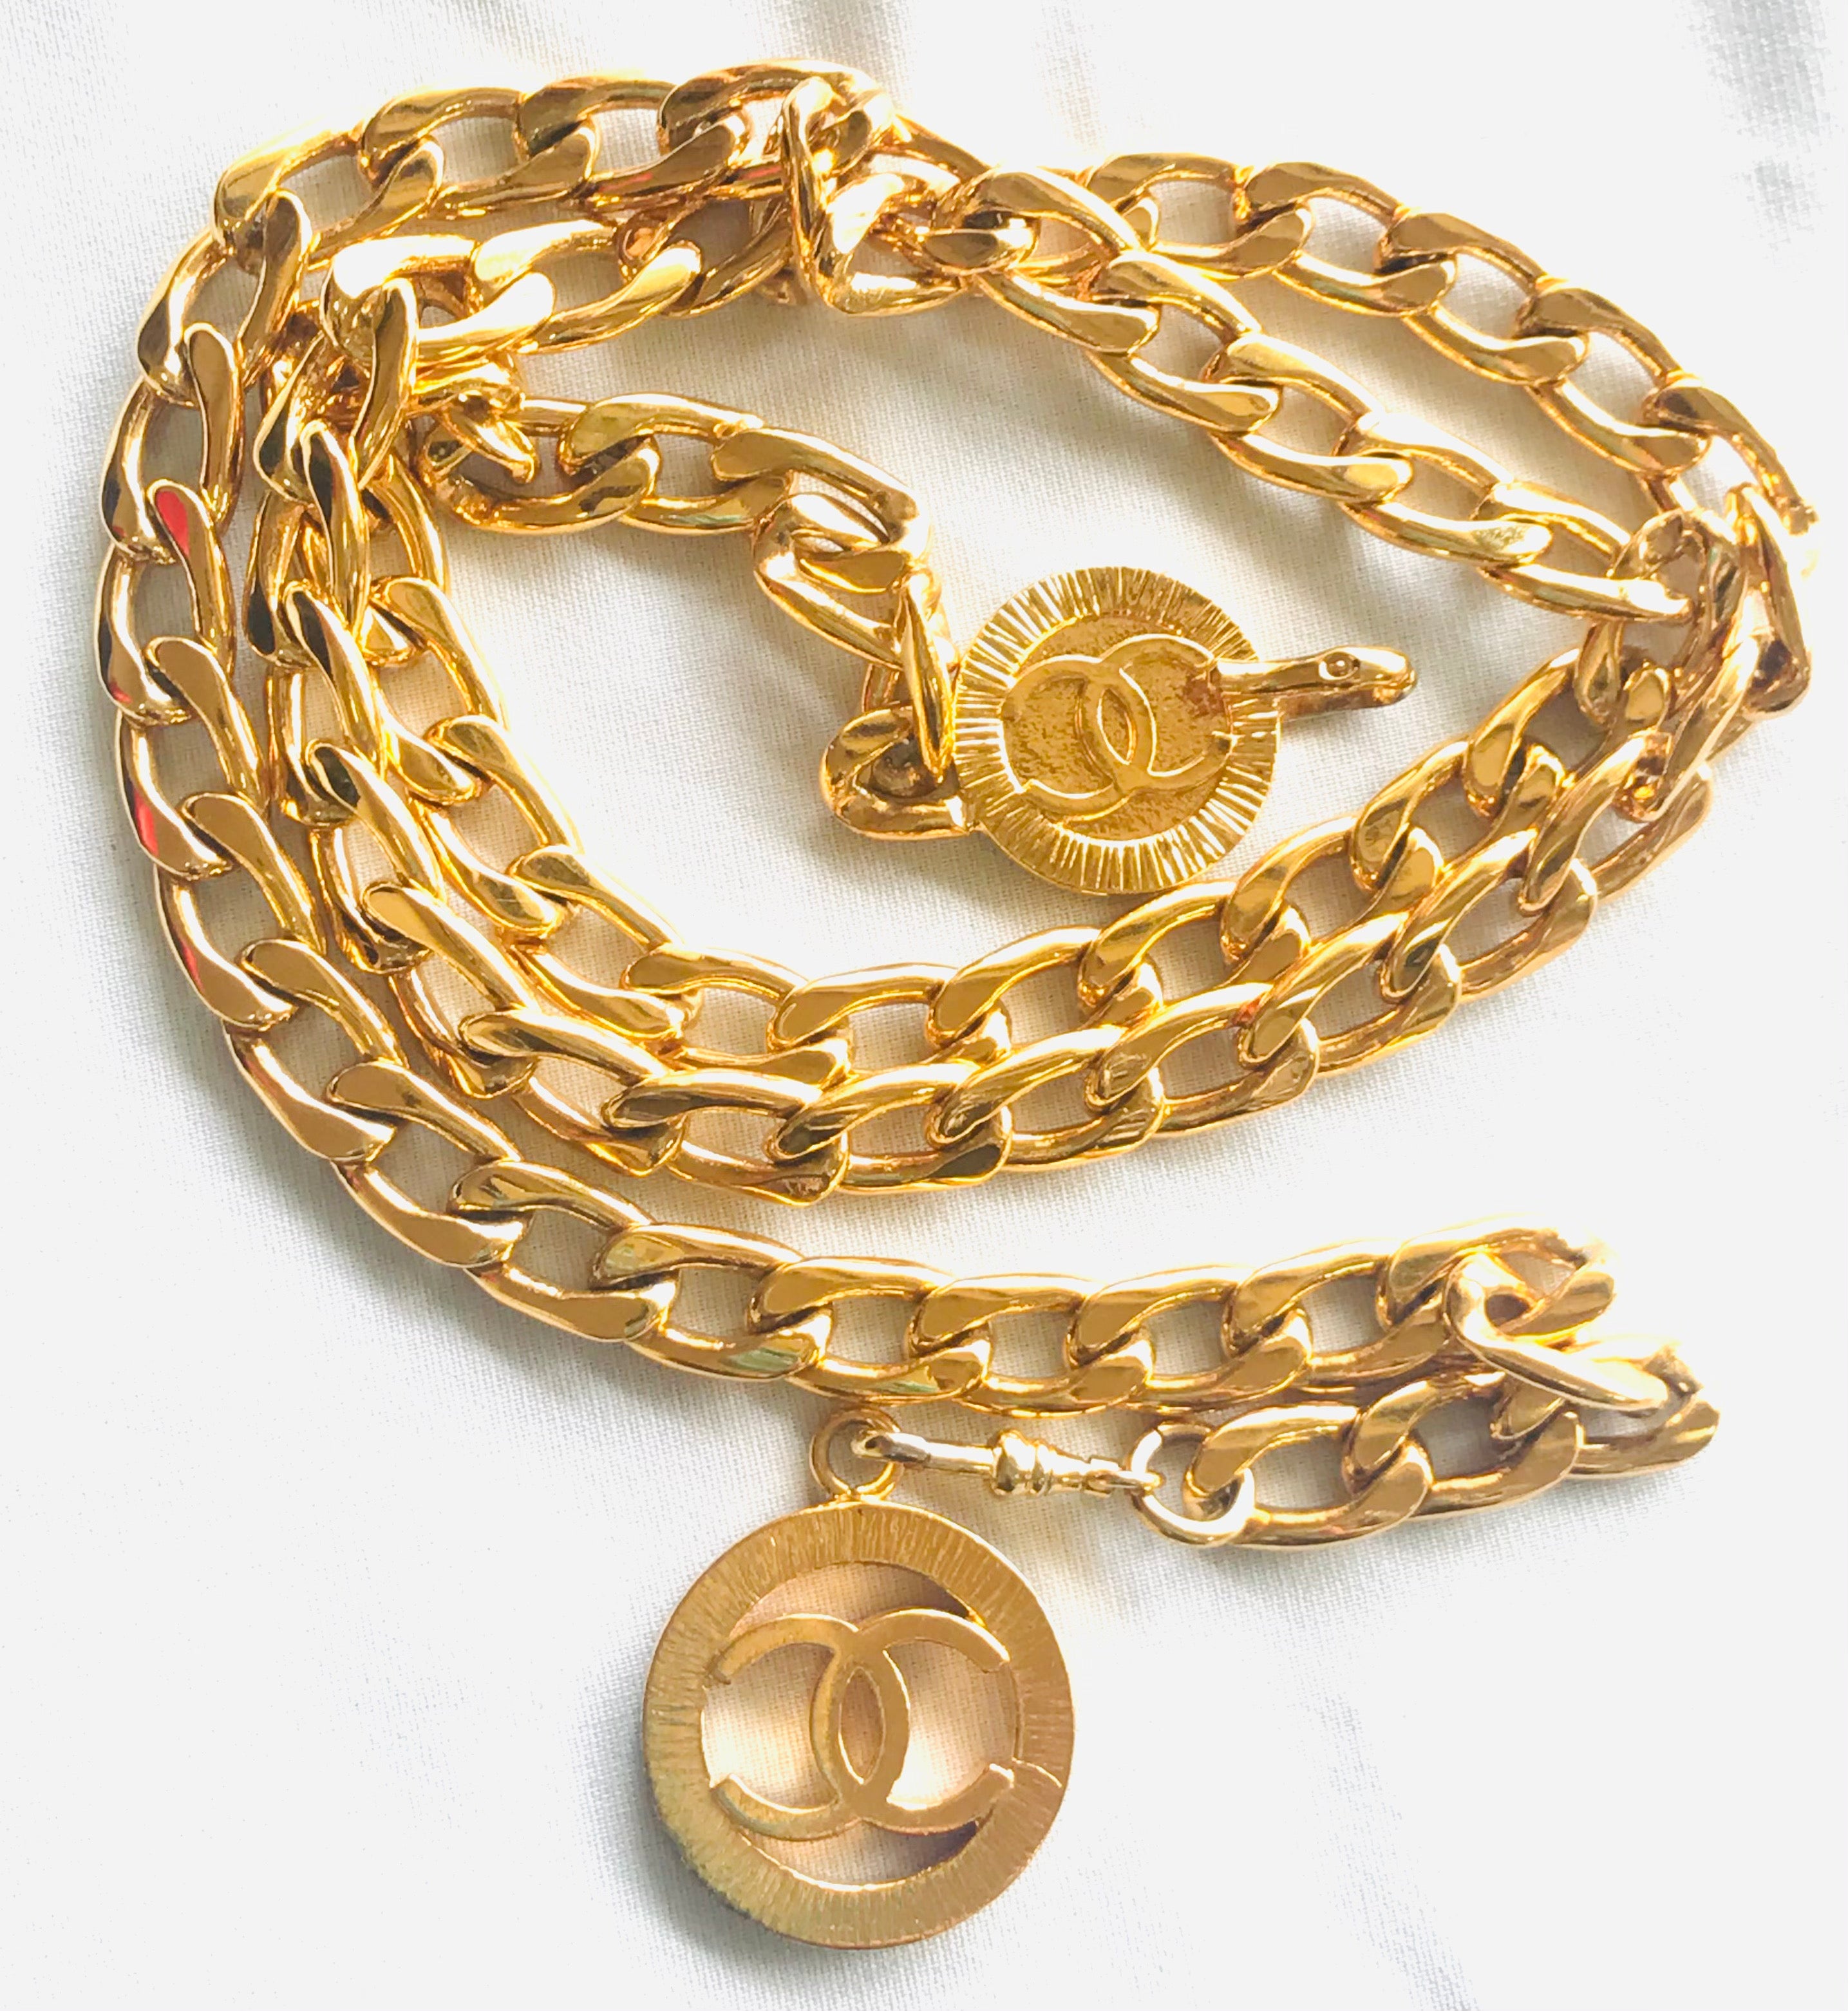 MINT. Vintage CHANEL flat golden chain belt with CC motif charms